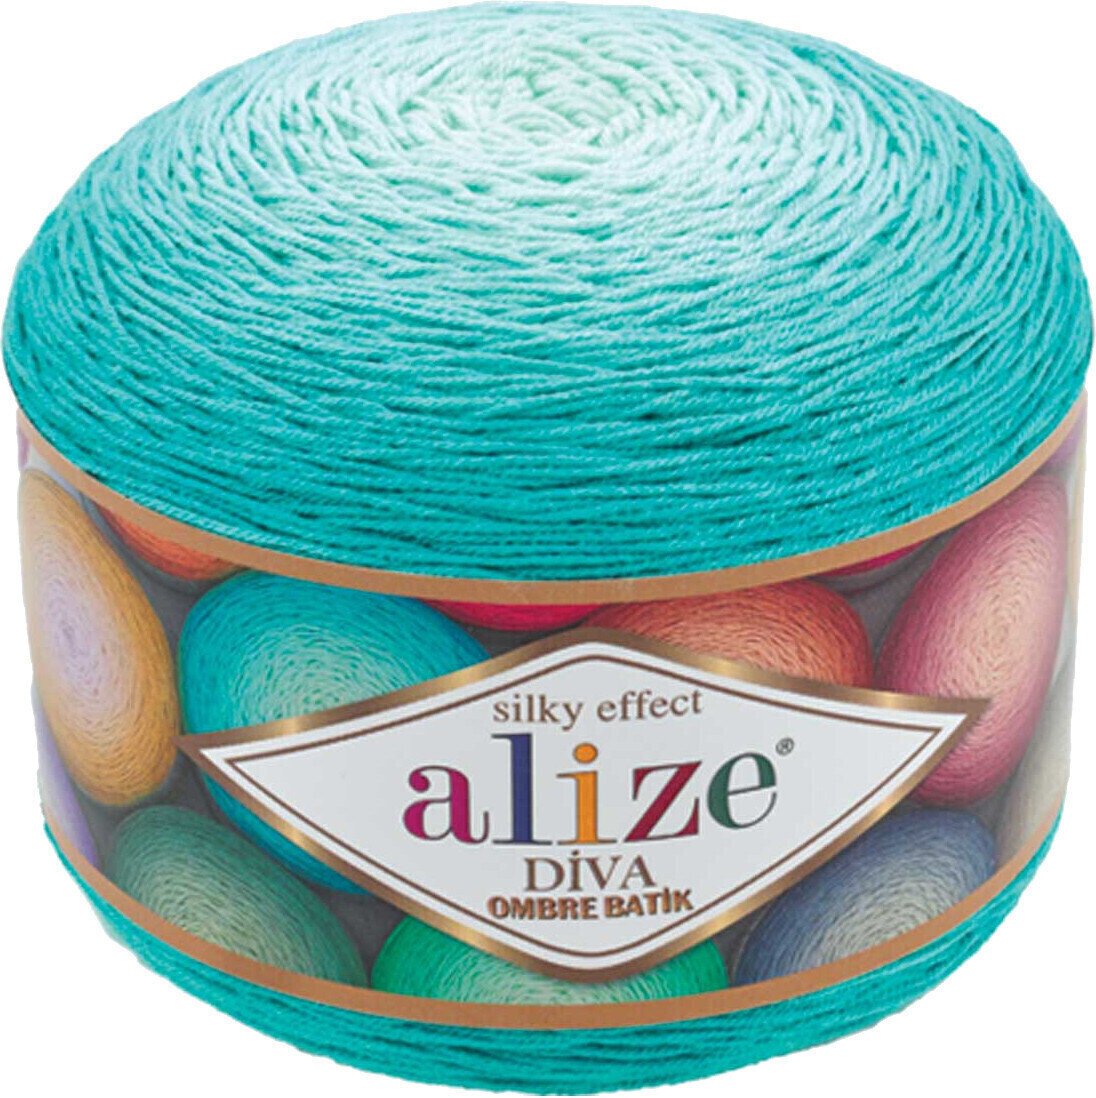 Knitting Yarn Alize Diva Ombre Batik 7370